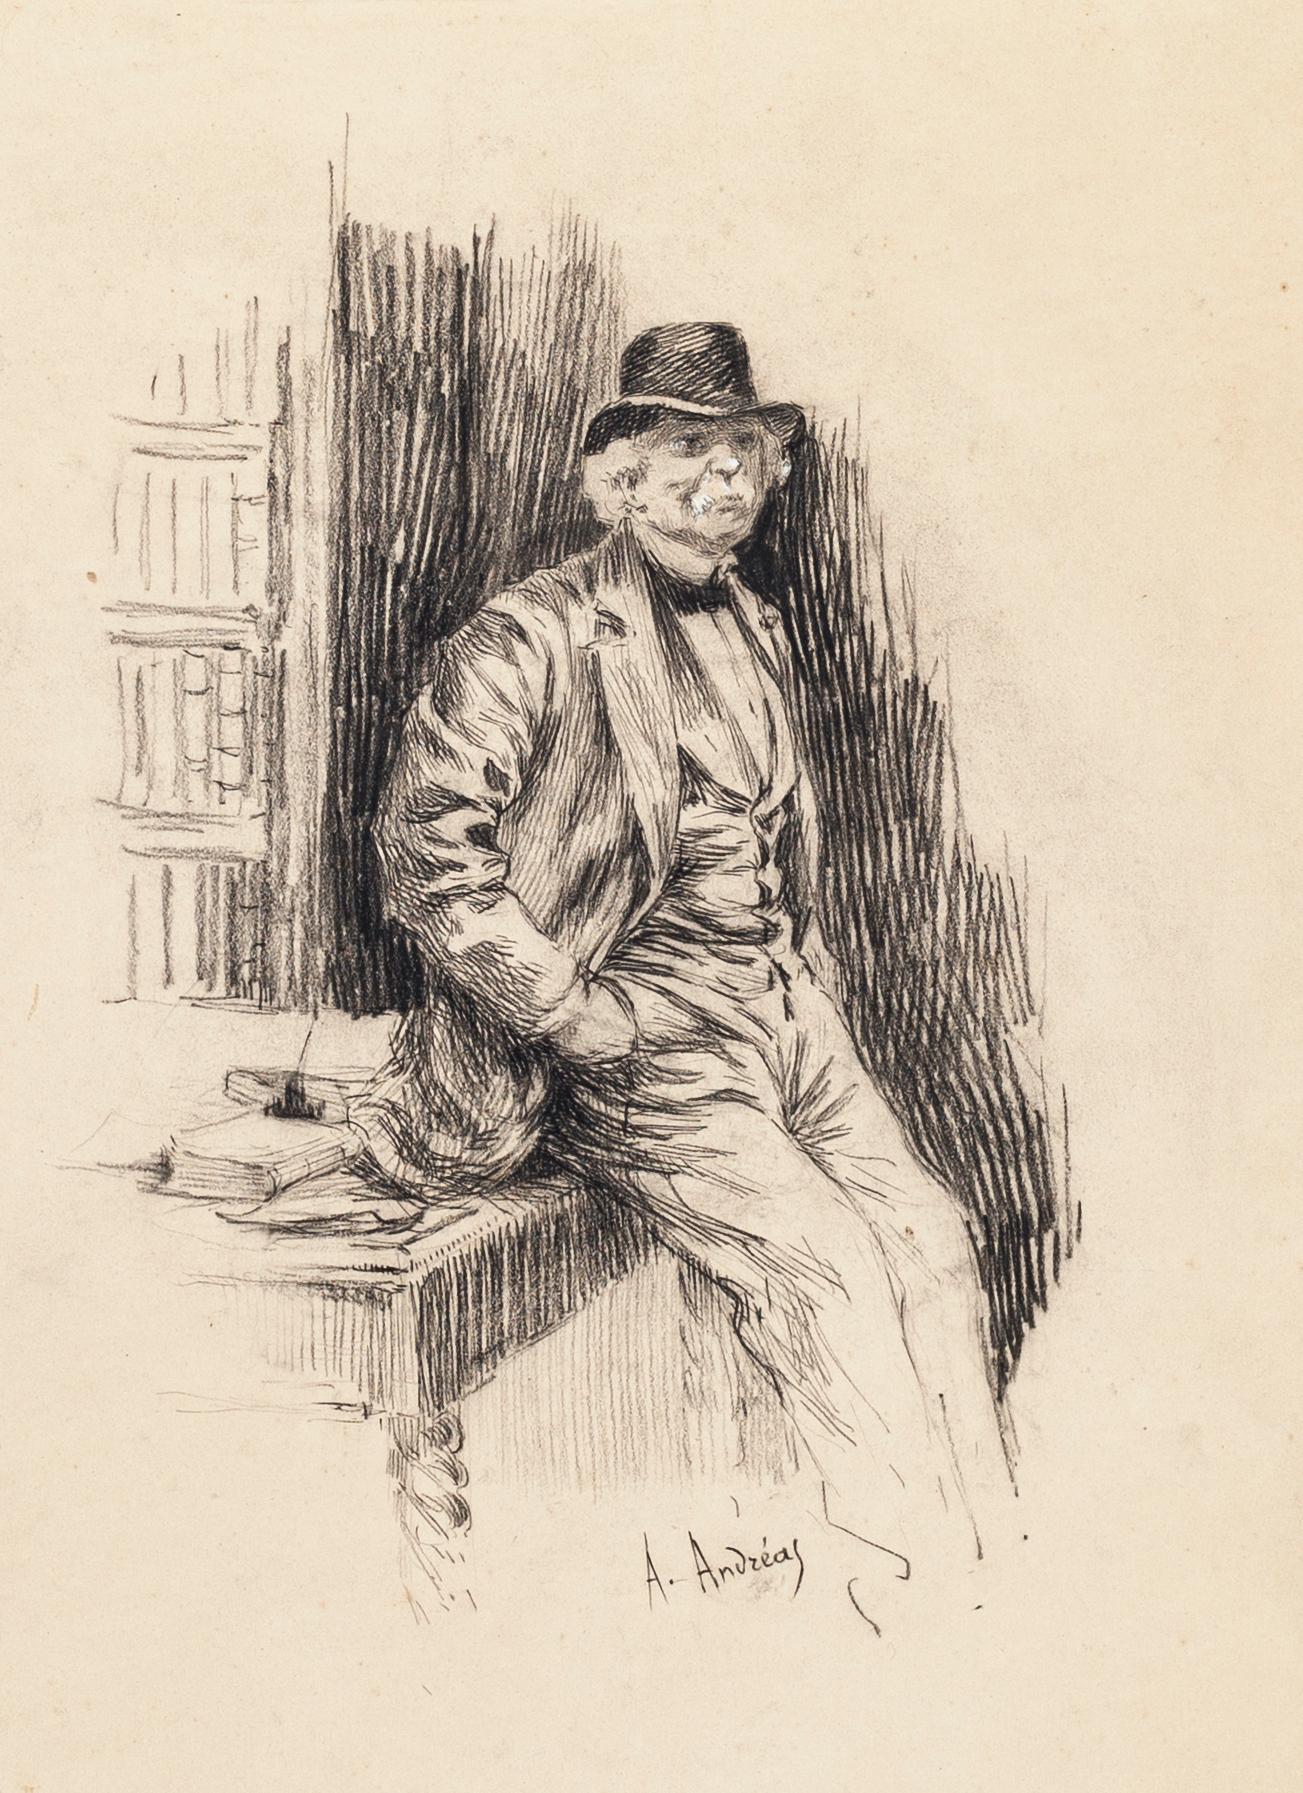 Andreas Achenbach Figurative Print - Portrait of Gentleman - Original Lithograph by A. Achenbach - Late 19th Century